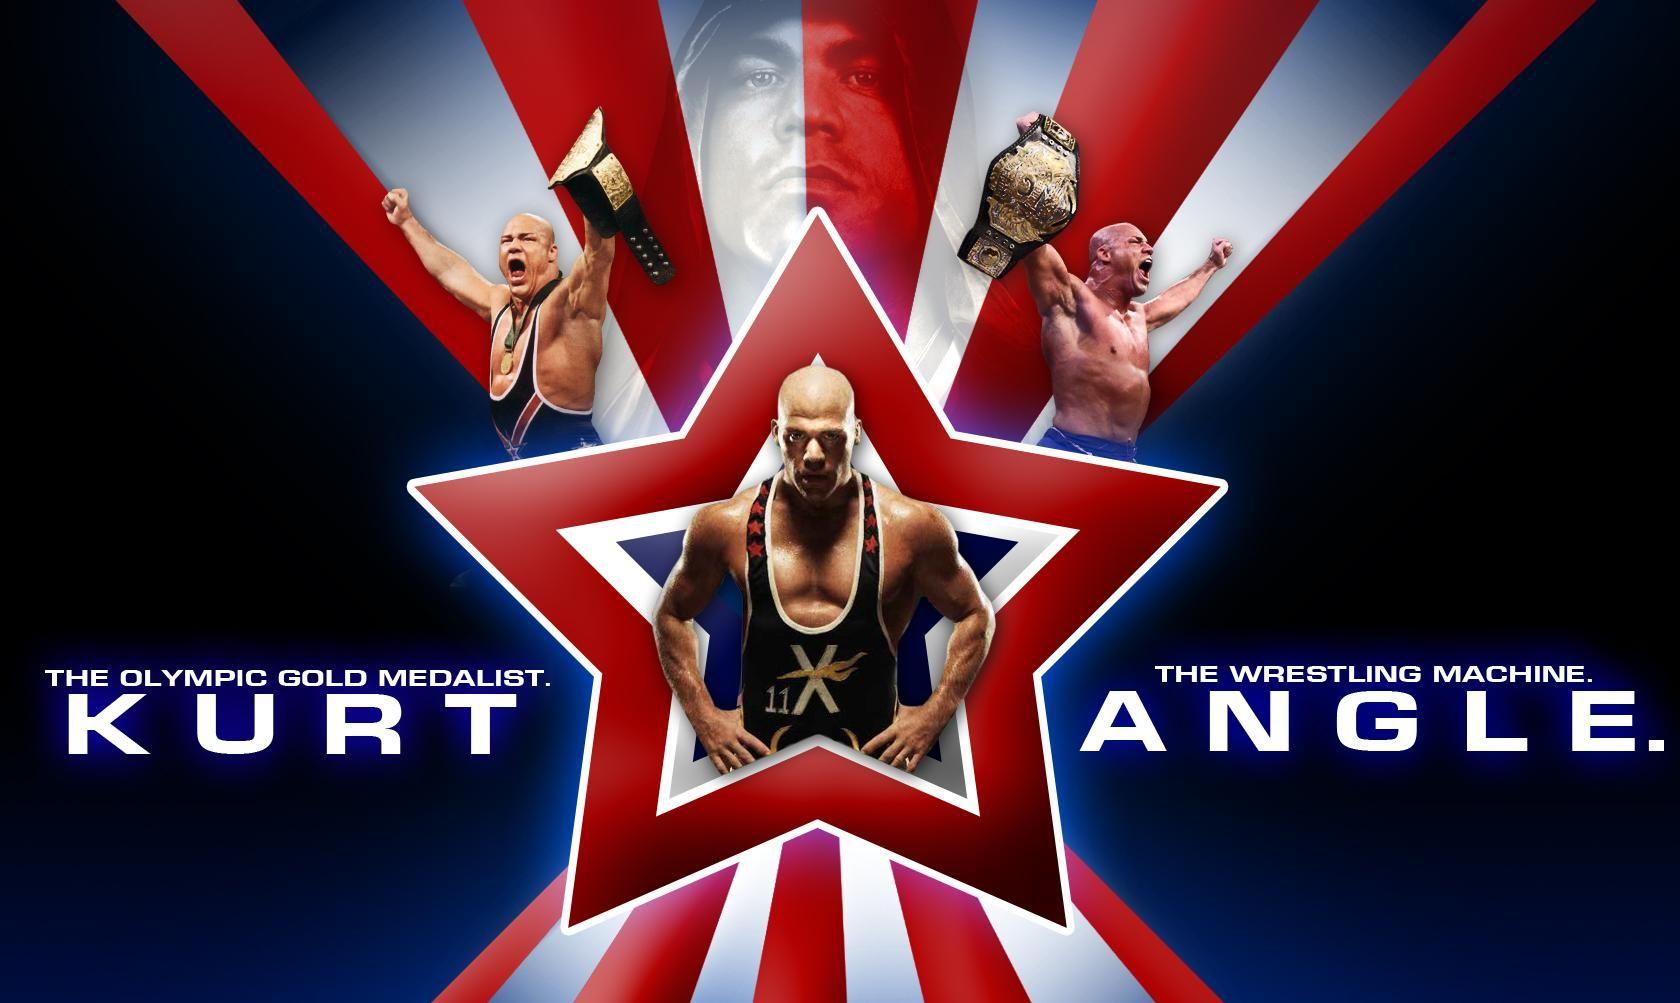 Wallpaper of Kurt Angle Superstars, WWE Wallpaper, WWE PPV's